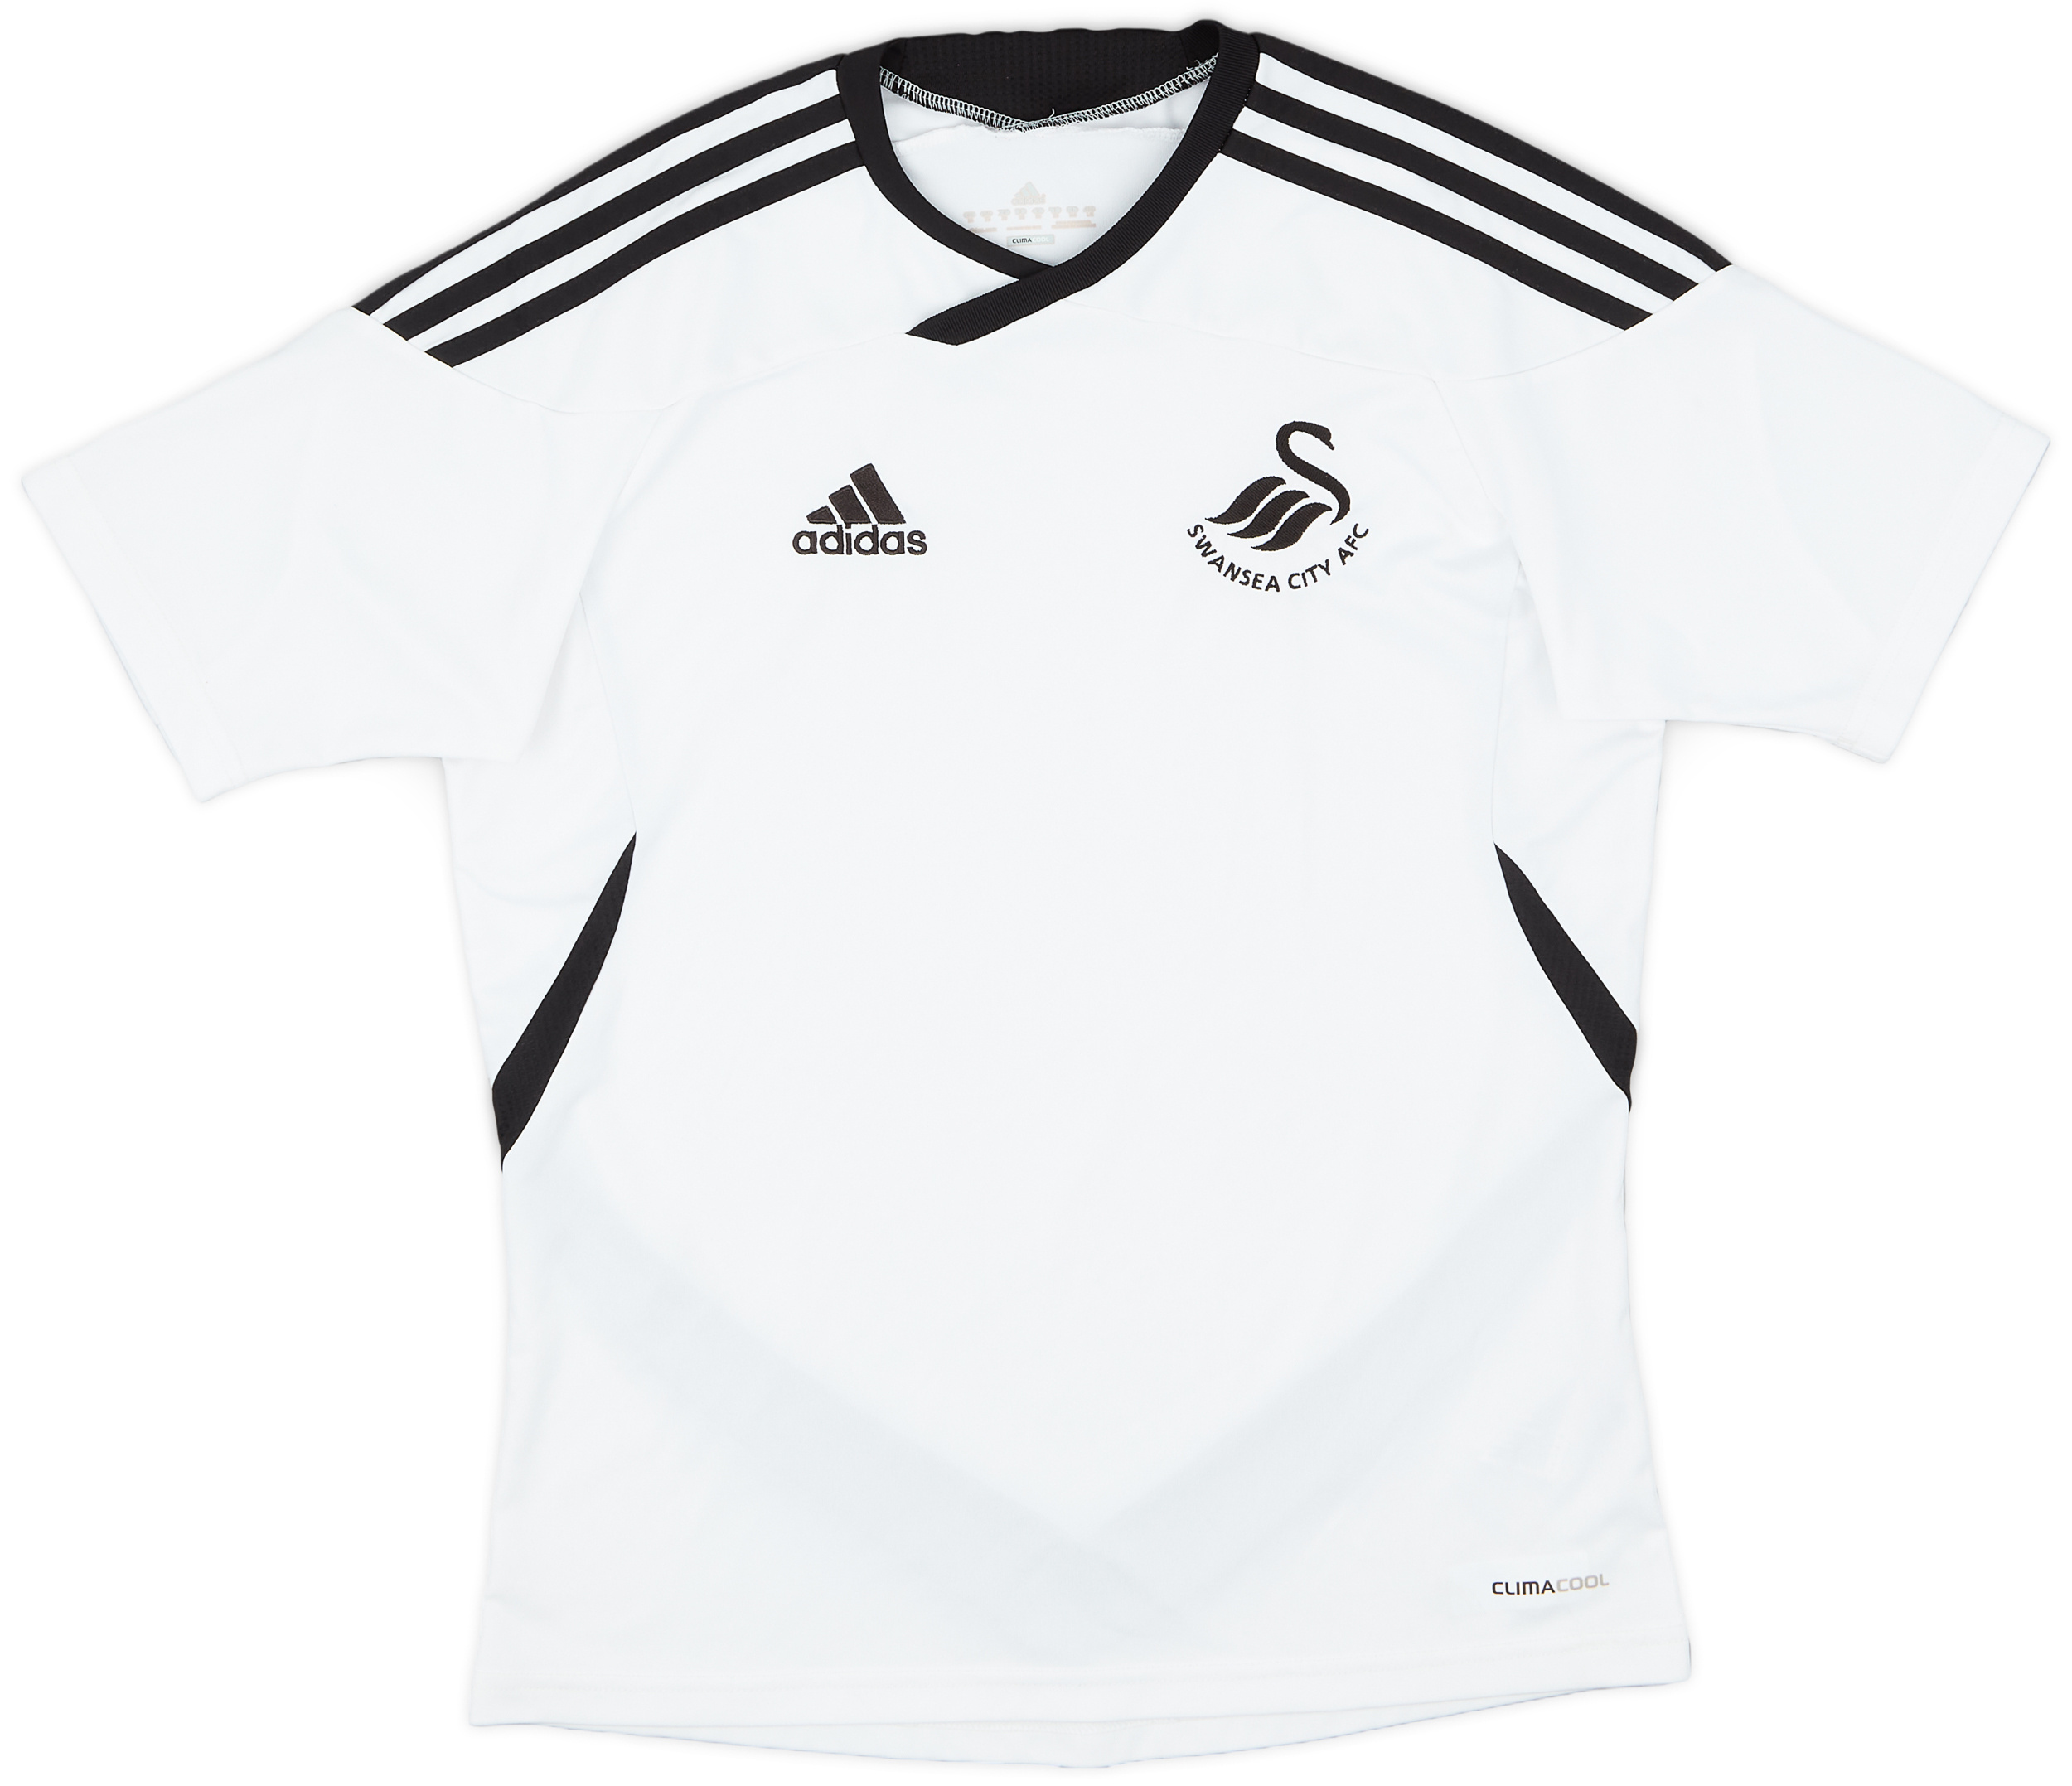 2011-12 Swansea City Home Shirt - 8/10 - ()